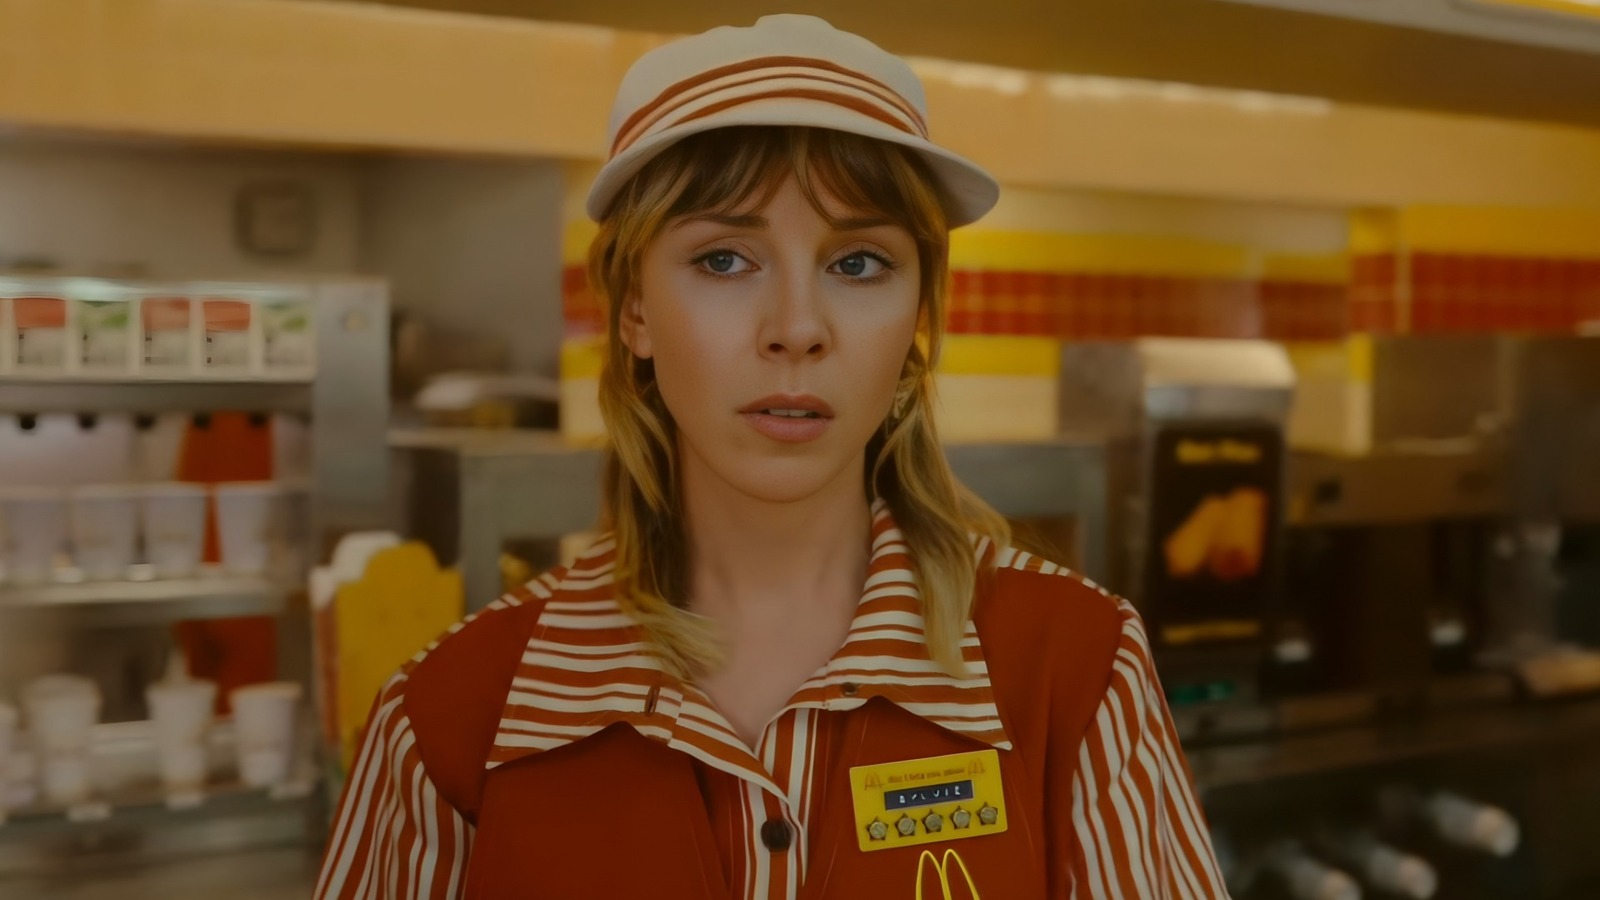 Sylvie working behind the counter at McDonald's in Loki season 2